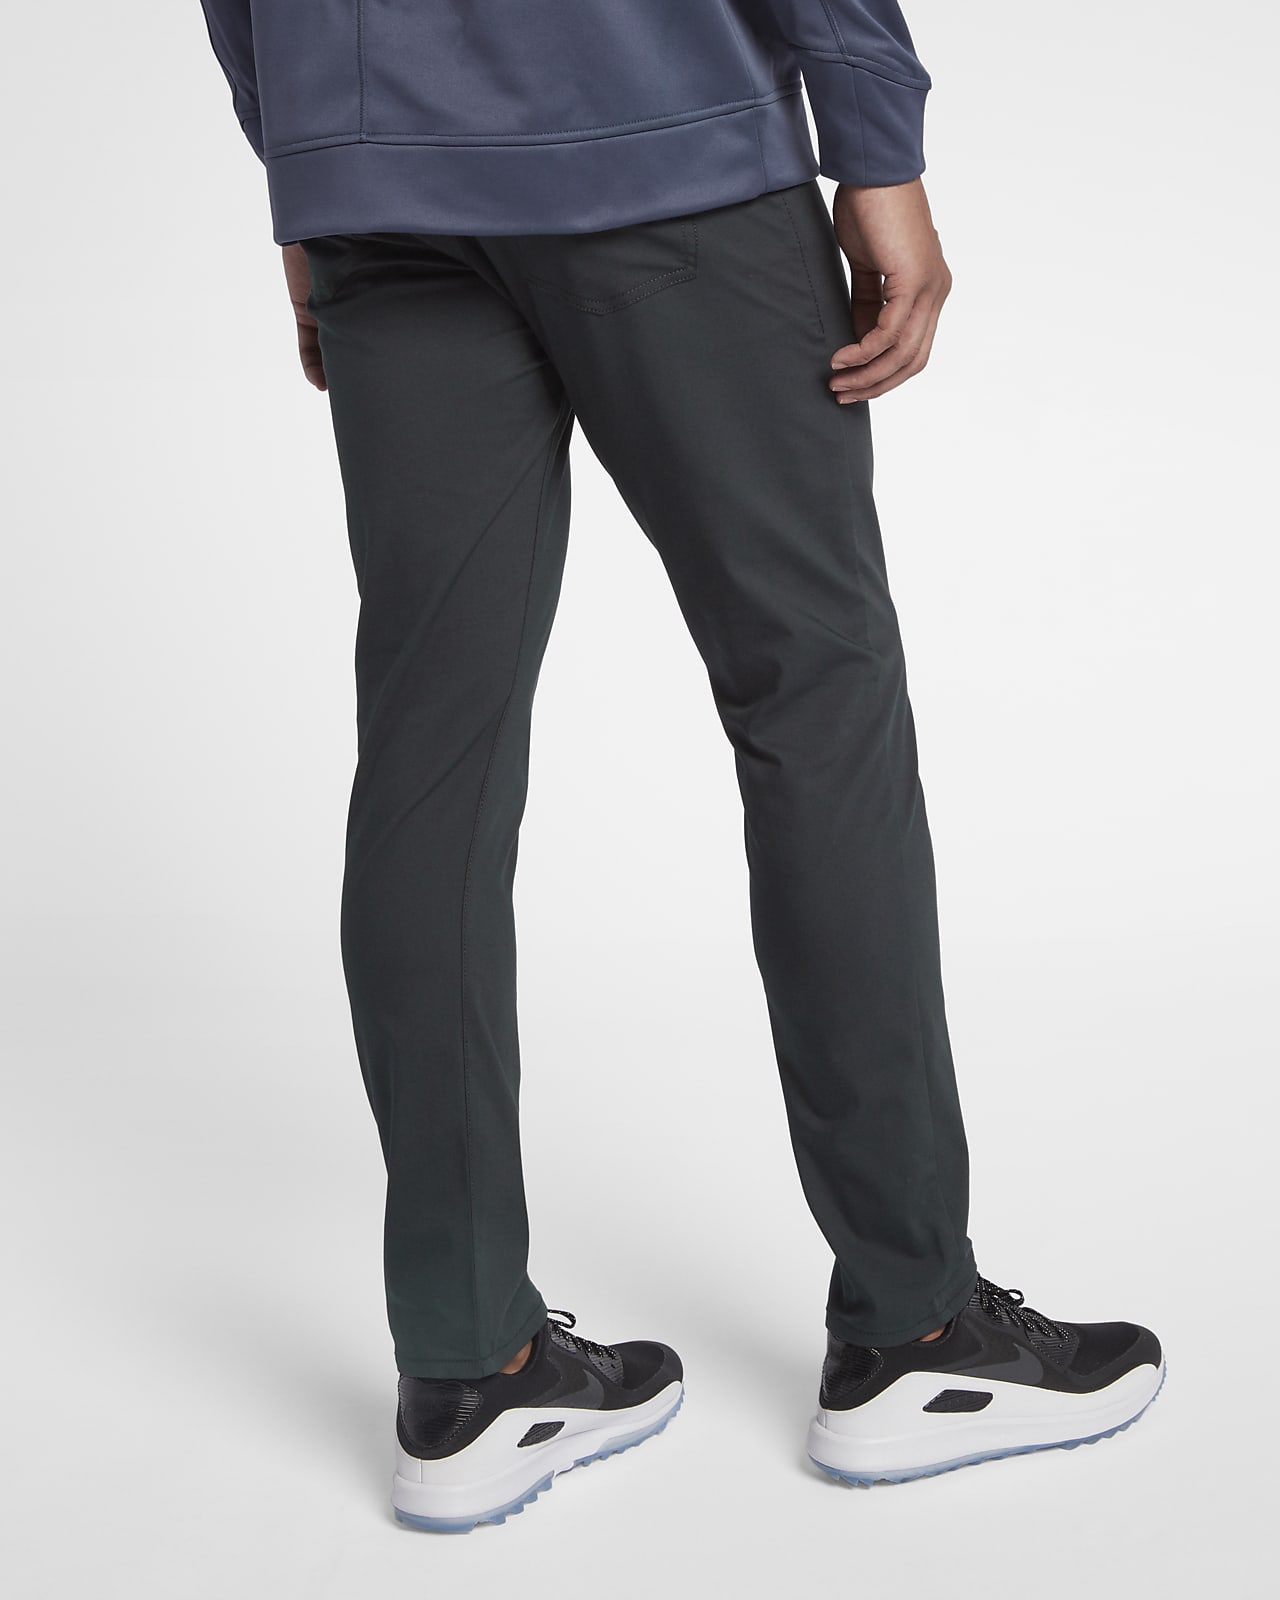 Pocket Men's Slim-Fit Golf Pants. Nike SA